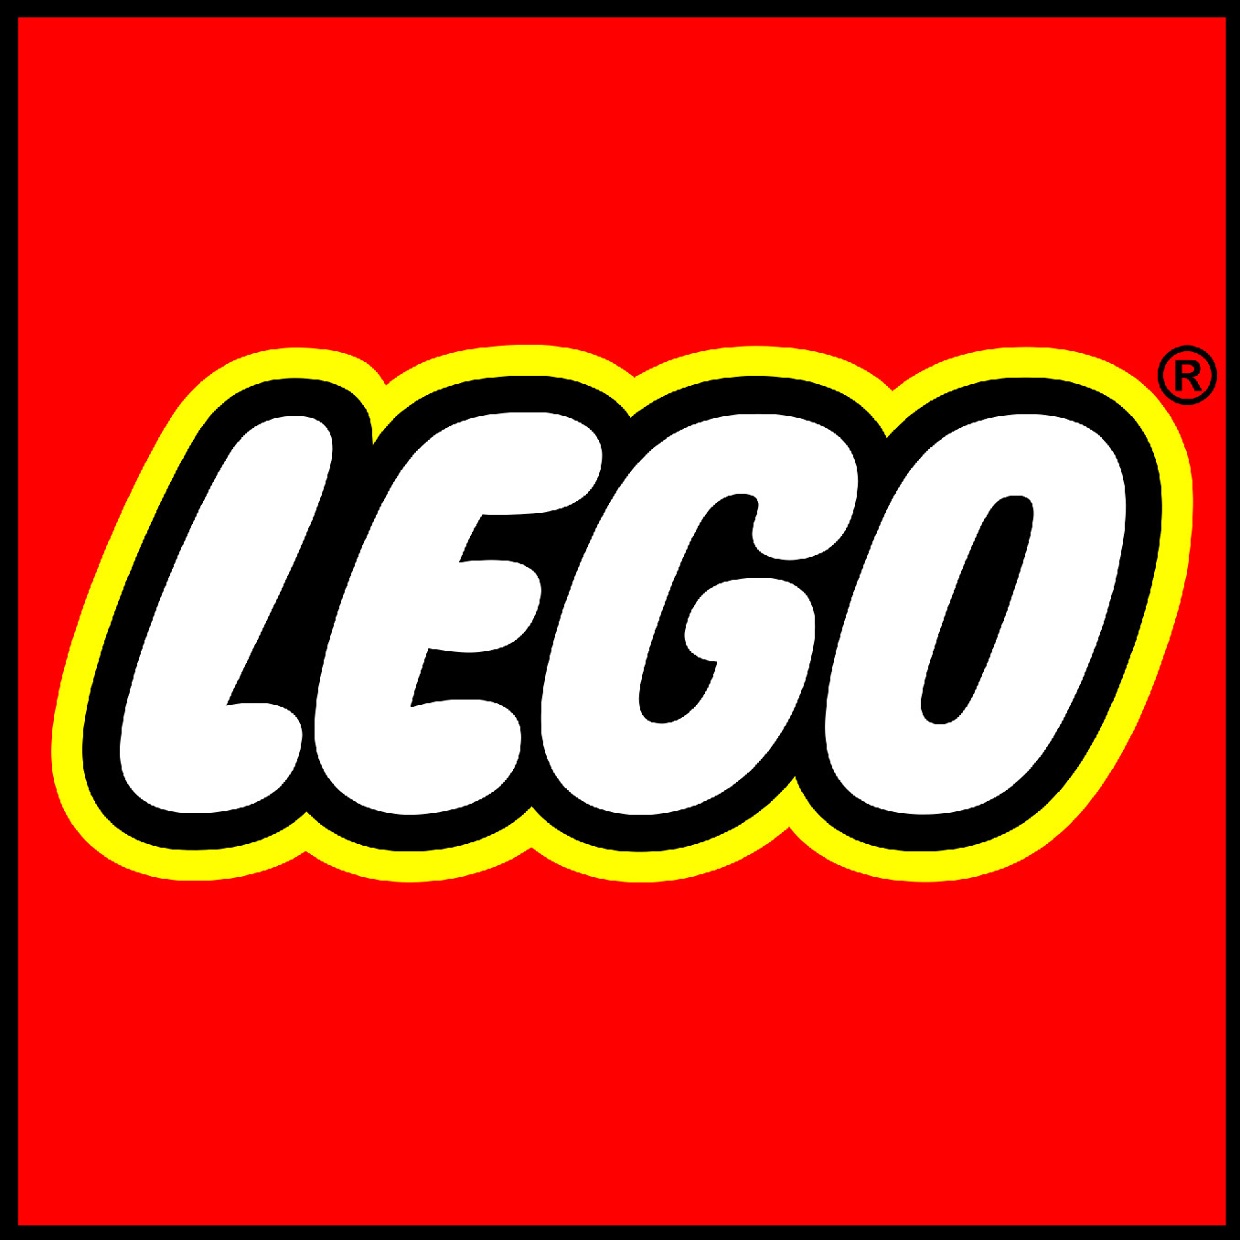 Lego Logo Blank Meme Template